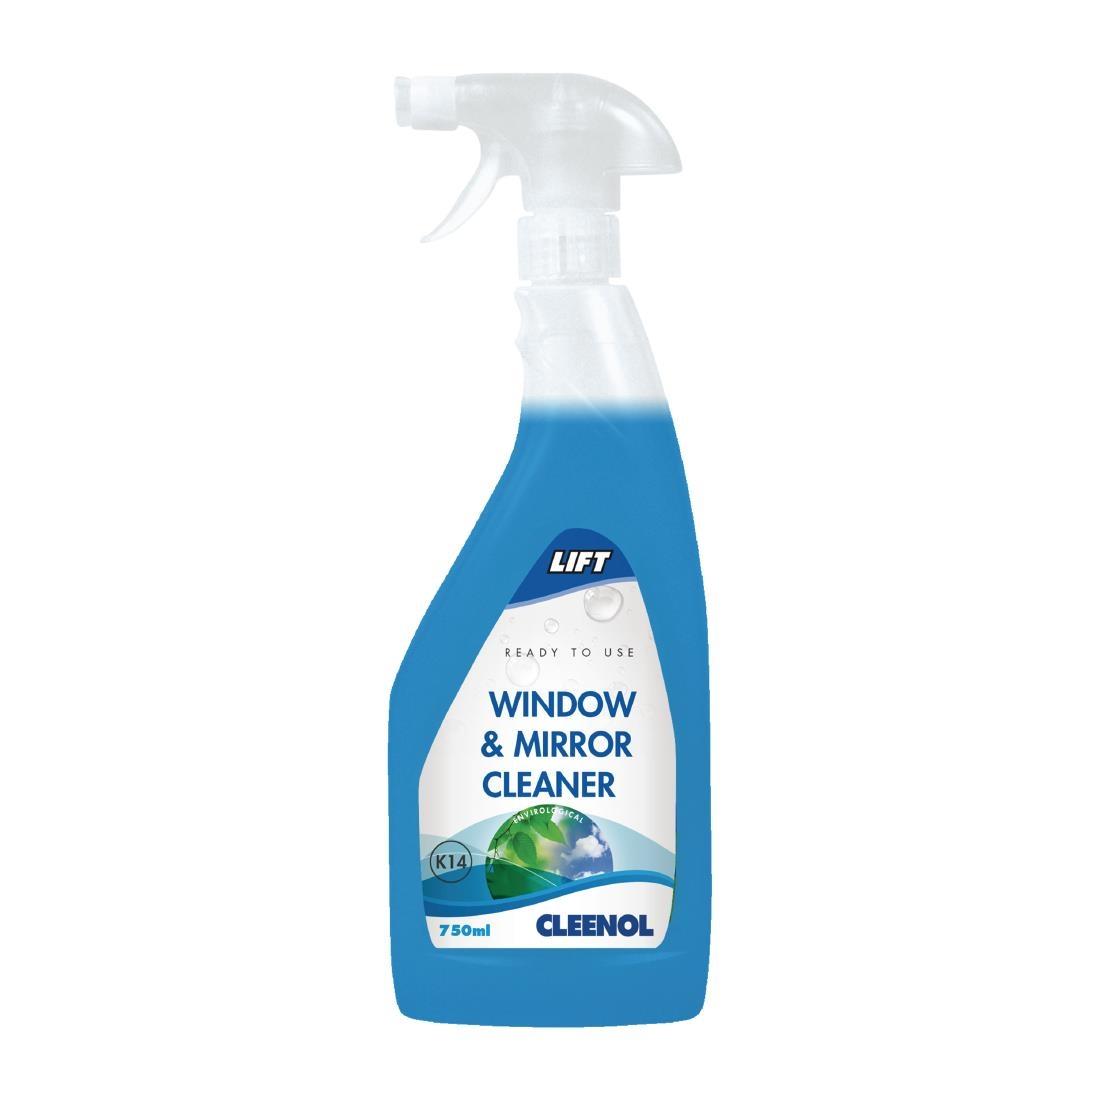 Cleenol Lift Window and Mirror Cleaner 750ml (Pack of 6) - FS095  - 1